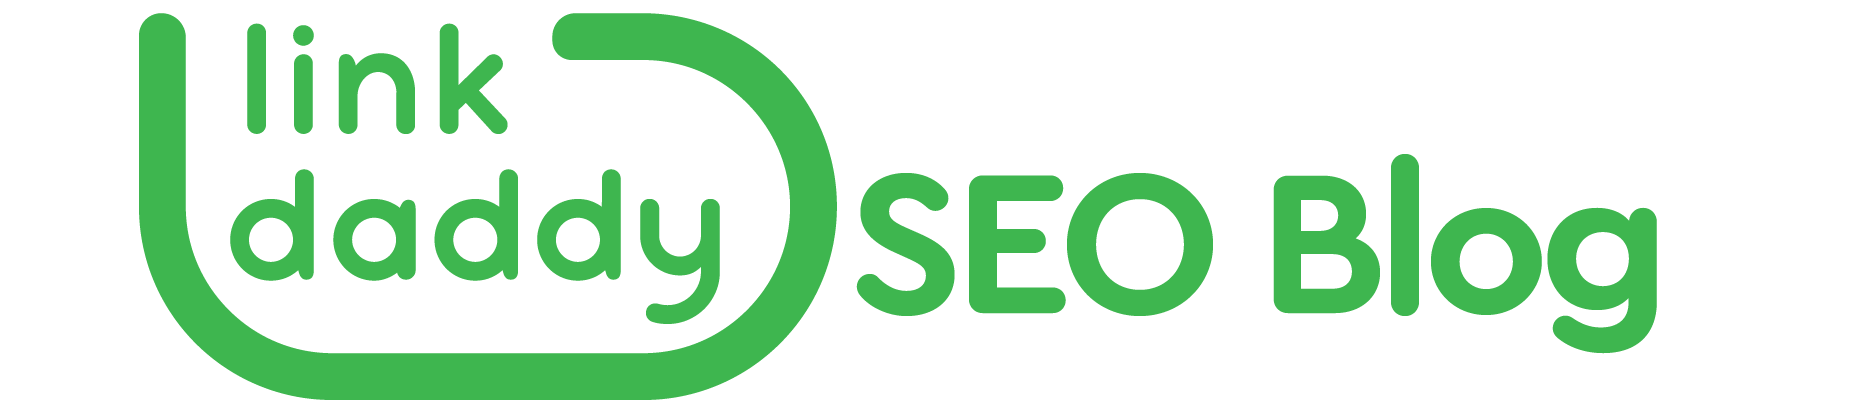 https://storage.googleapis.com/cloudsites/seo-services/86790ec8m/img/cropped-linkdaddy-seoblog-logo.png